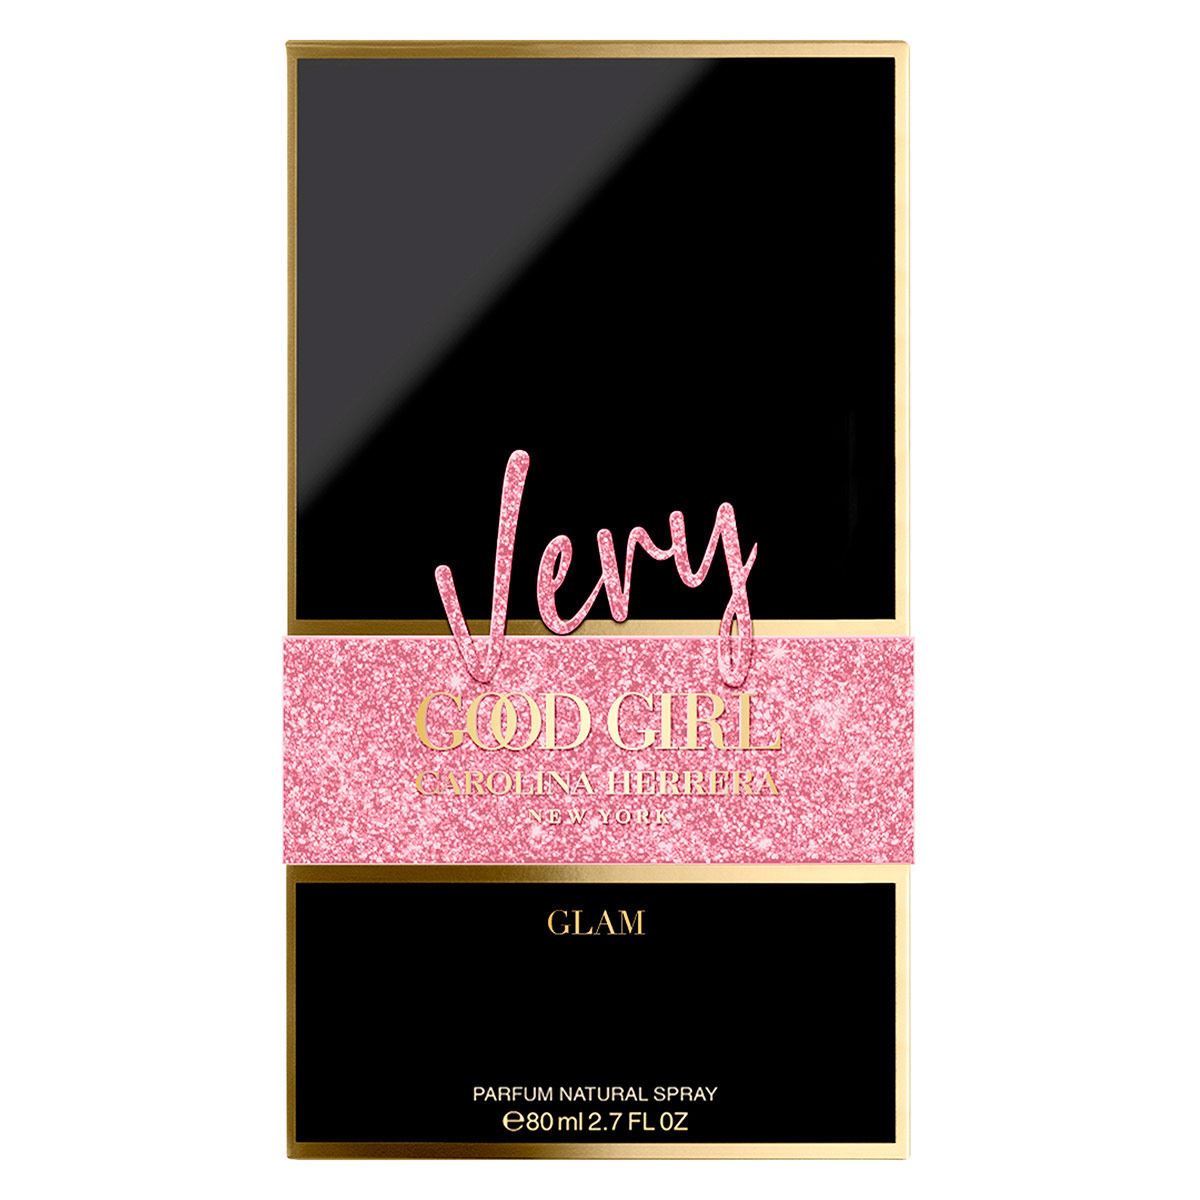 Very Good Girl Glam Parfum - 80 ml · Carolina Herrera · El Corte Inglés